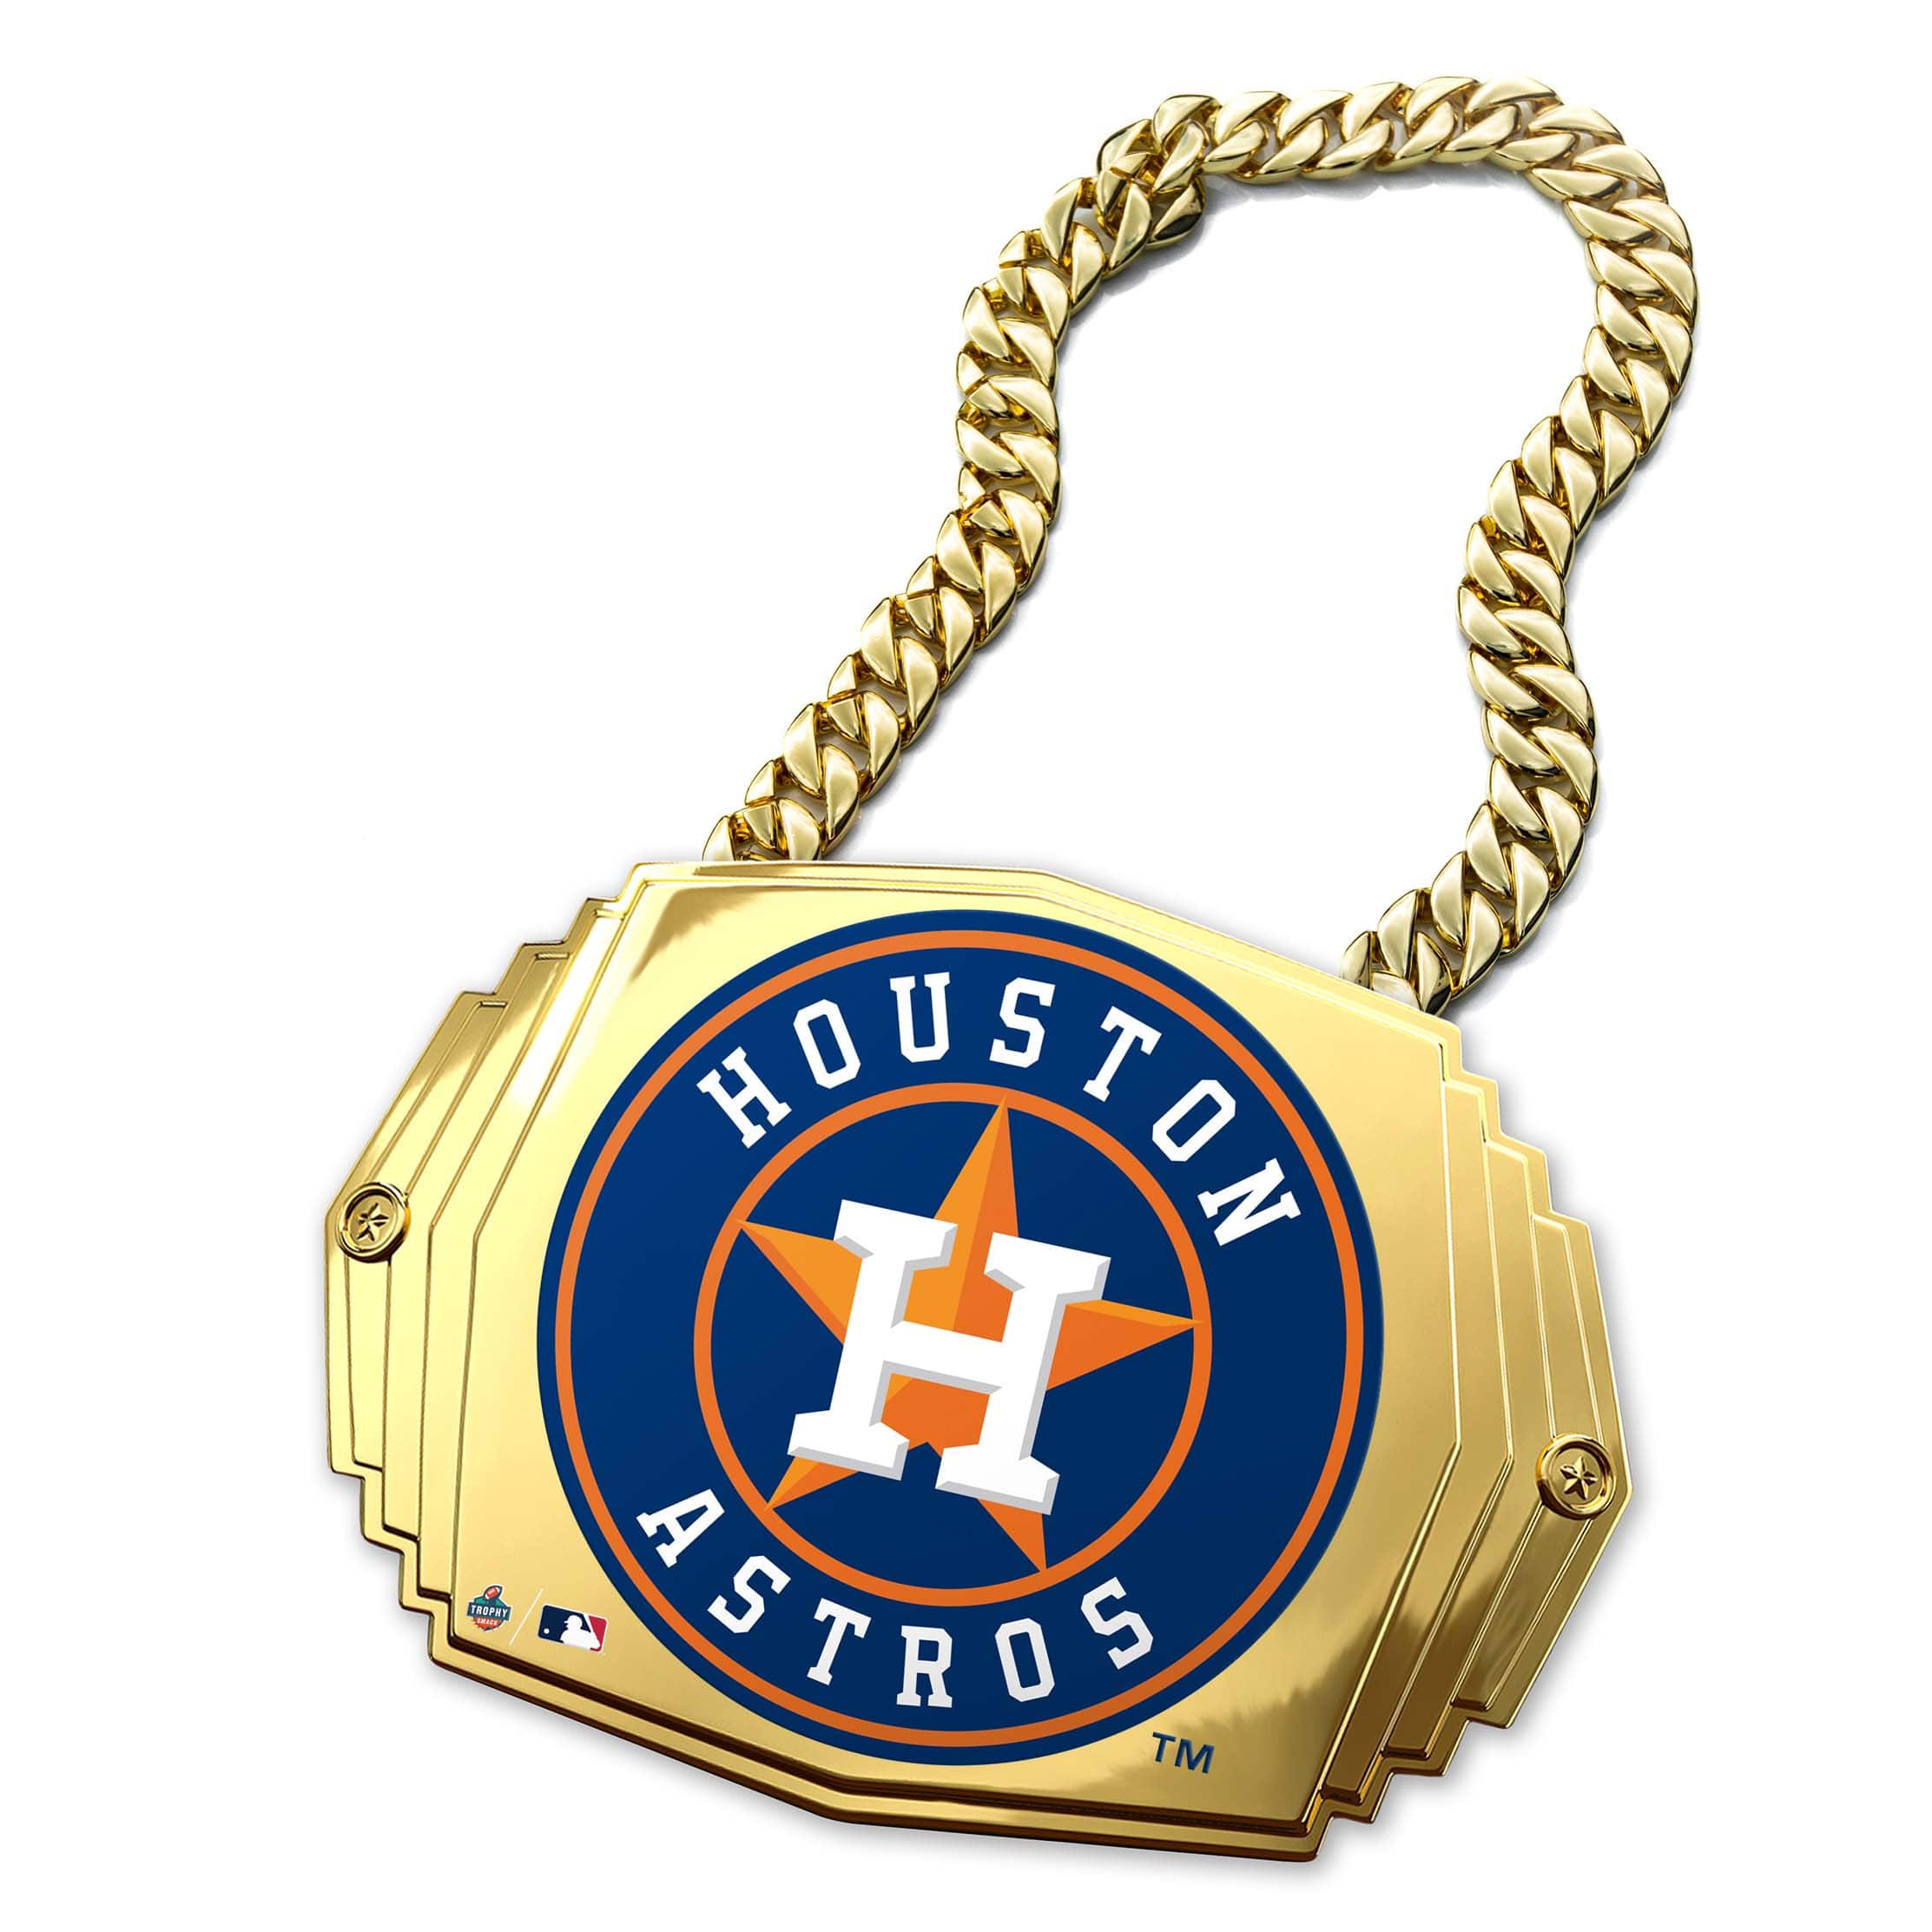 HOU Astros Turnover Chain 5lb.